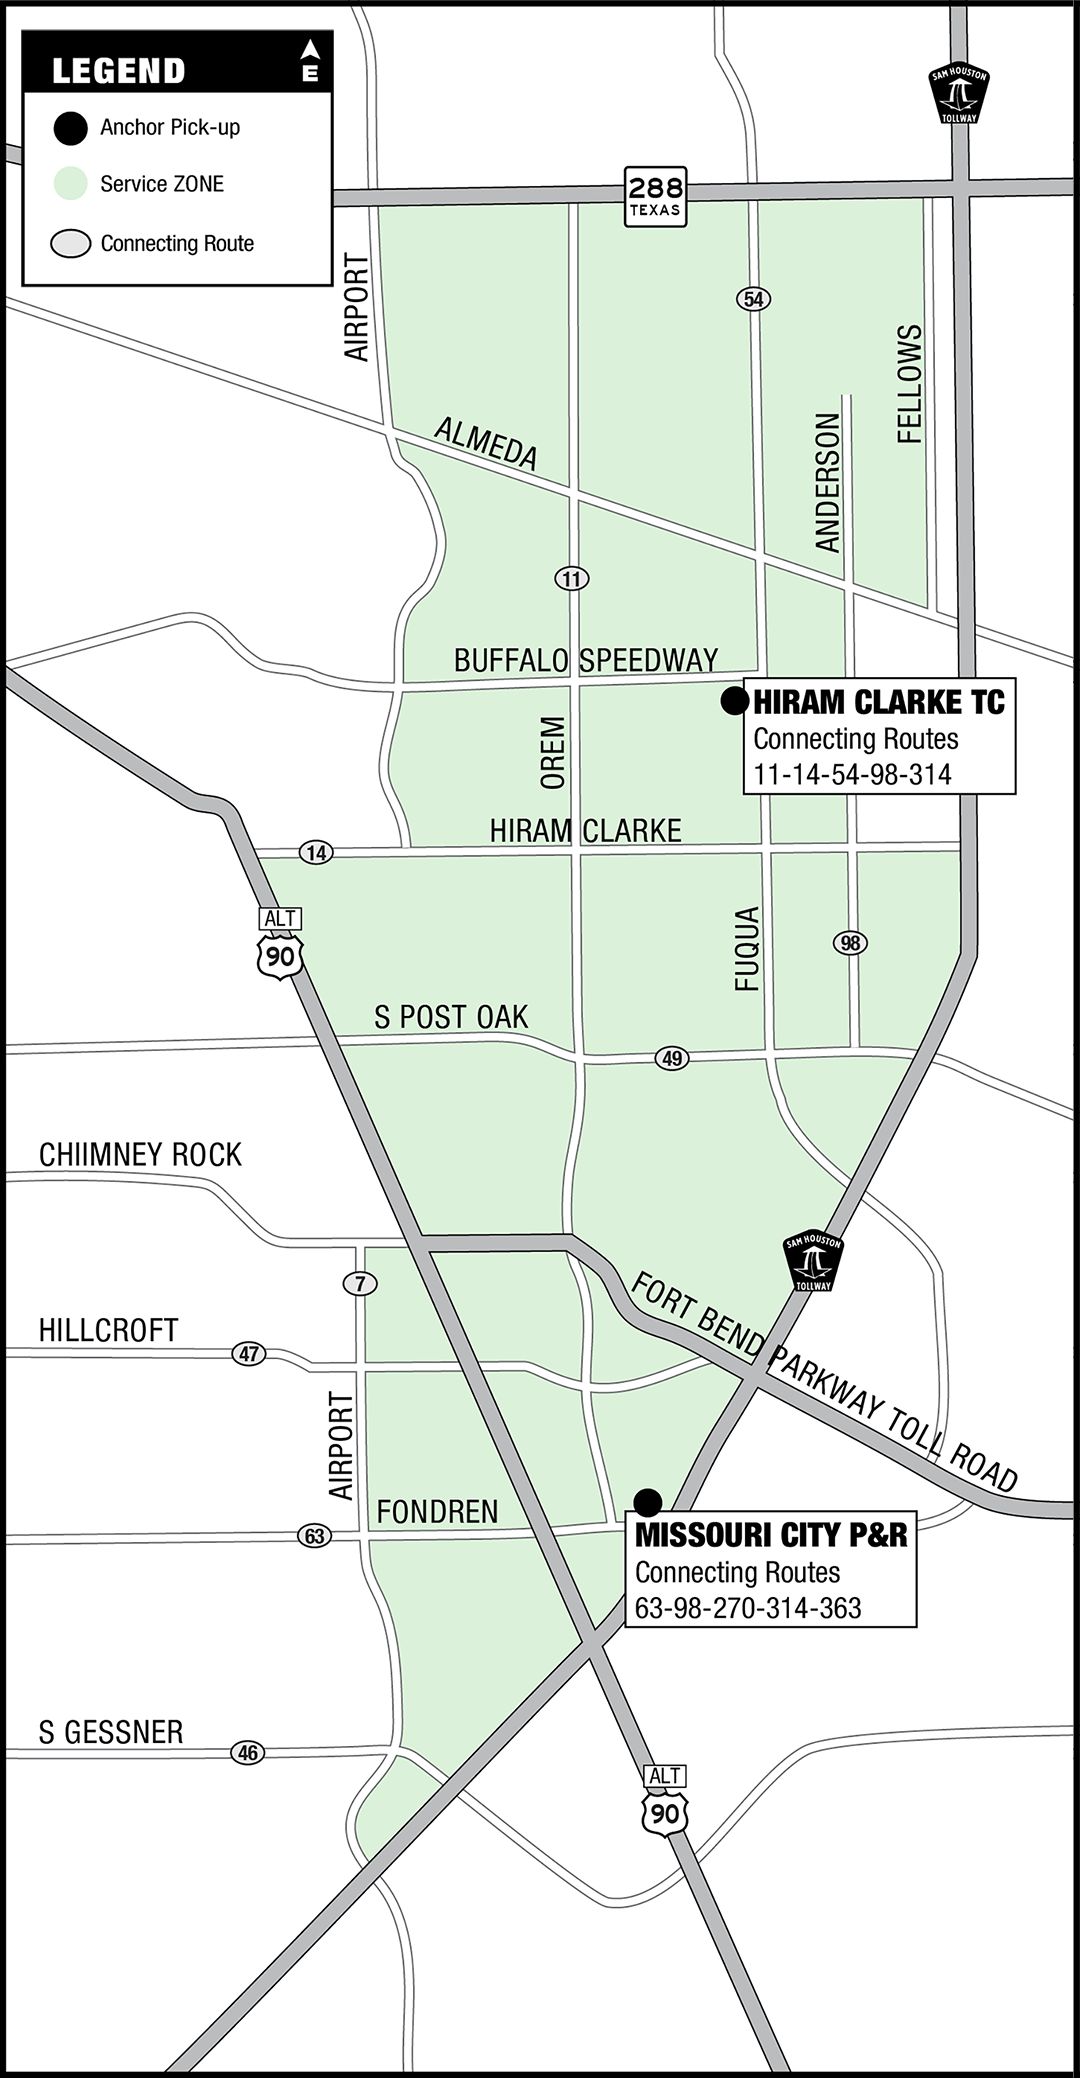 Zone map for 314 Hiram Clarke - curb2curb shuttle.